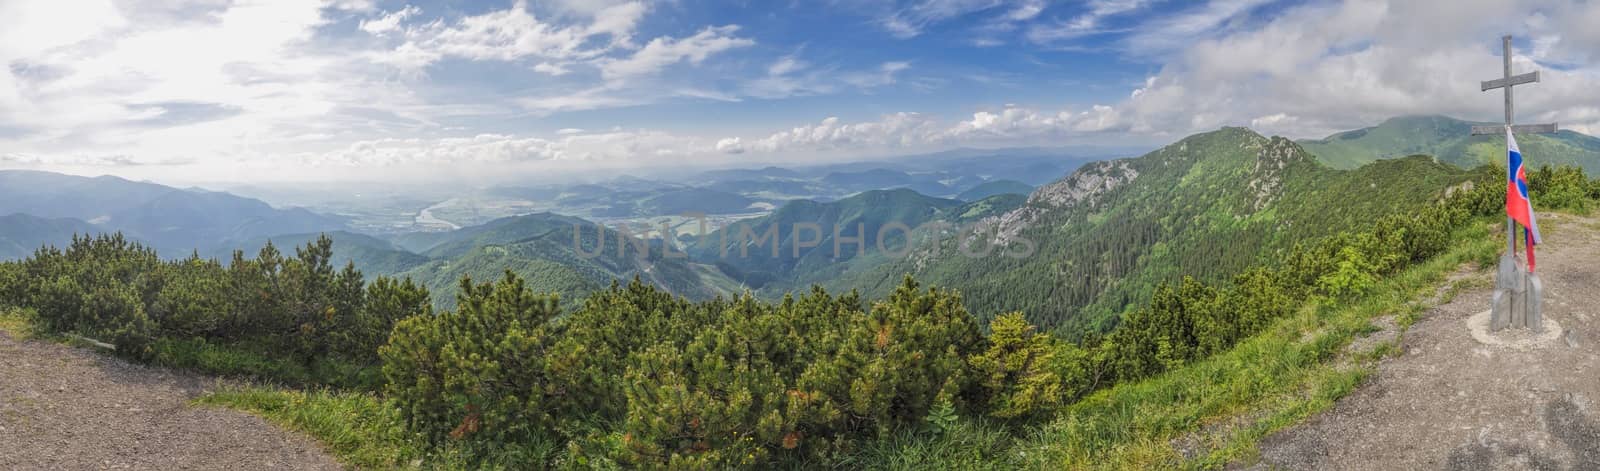 Scenic panorama of Mala Fatra mountains in Slovakia